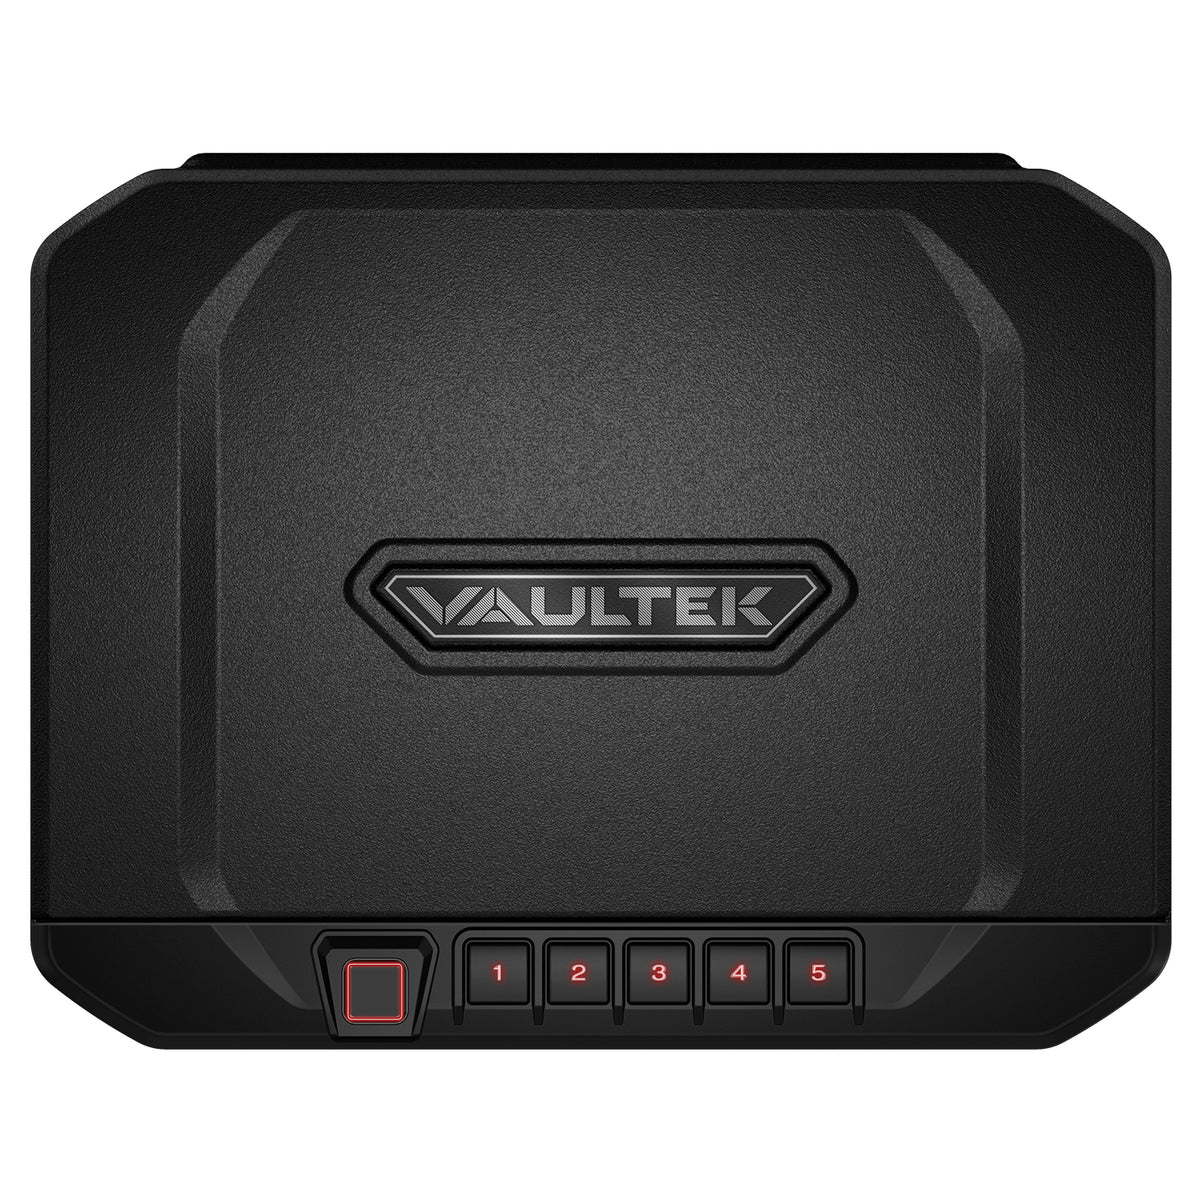 Vaultek - 20 Series VS20i Compact Bluetooth and Biometric Gun Safe